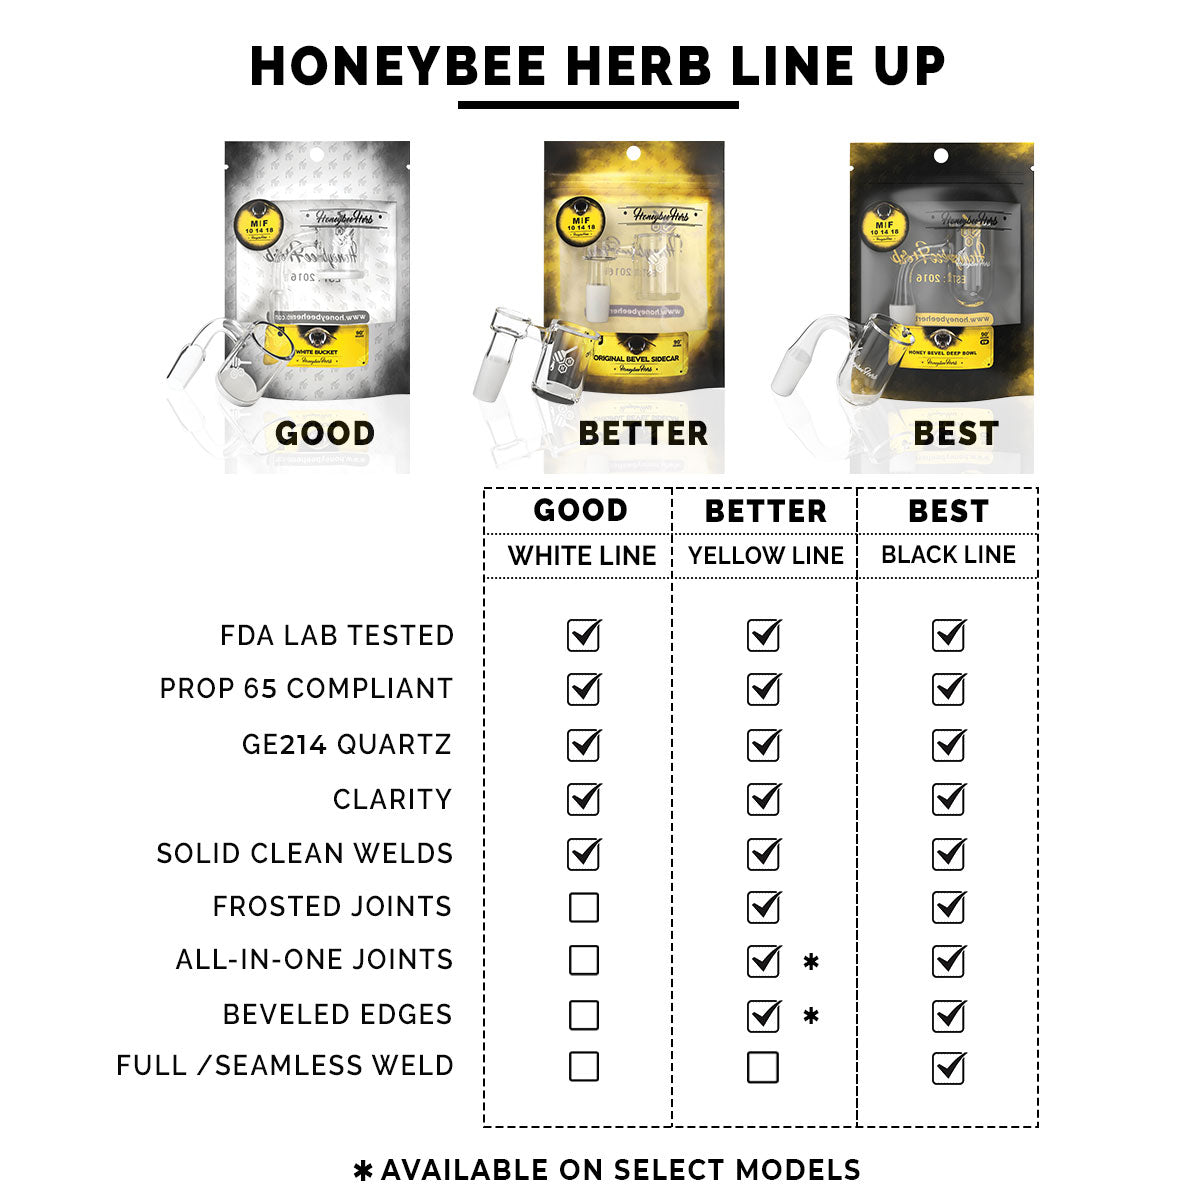 Honeybee Herb Quartz Banger Comparison Chart, detailing features across Good, Better, Best lines.